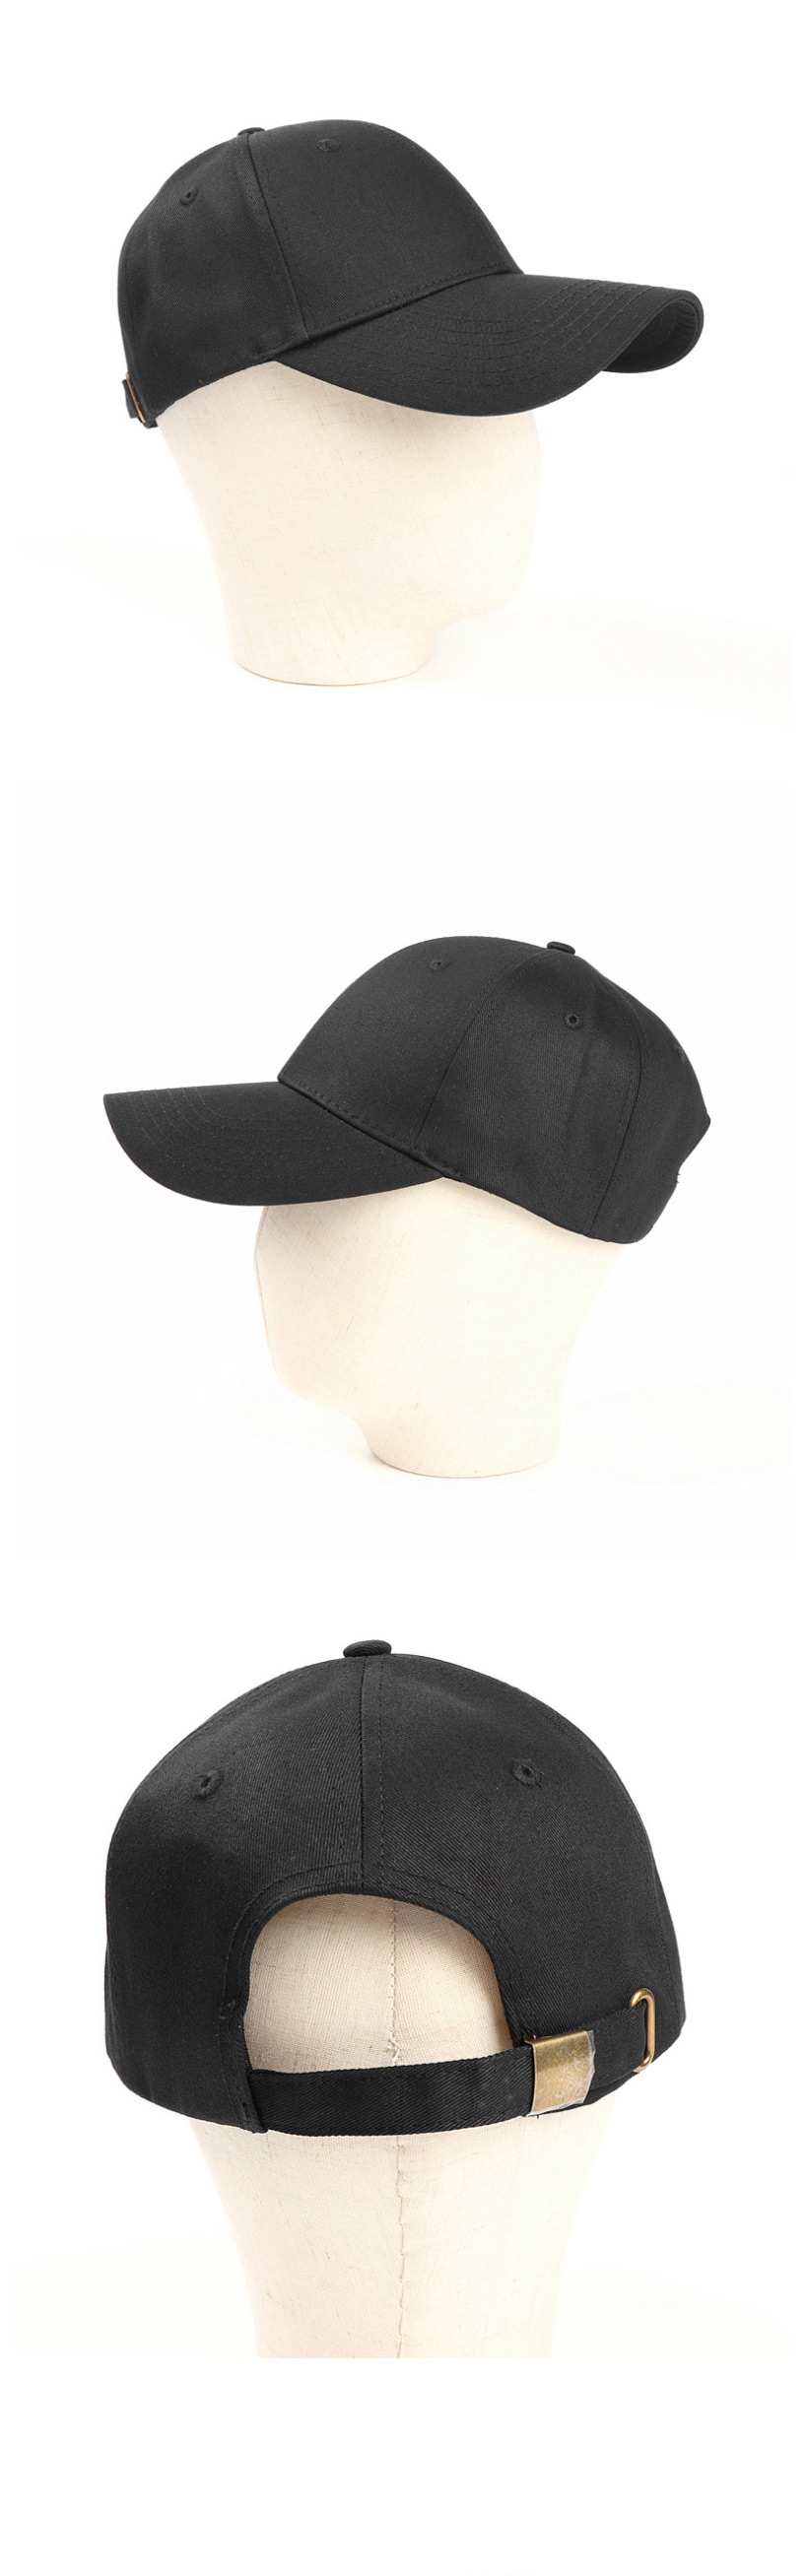 Fashion Sapphire Cotton Hard Top And Long Brim Baseball Cap,Baseball Caps